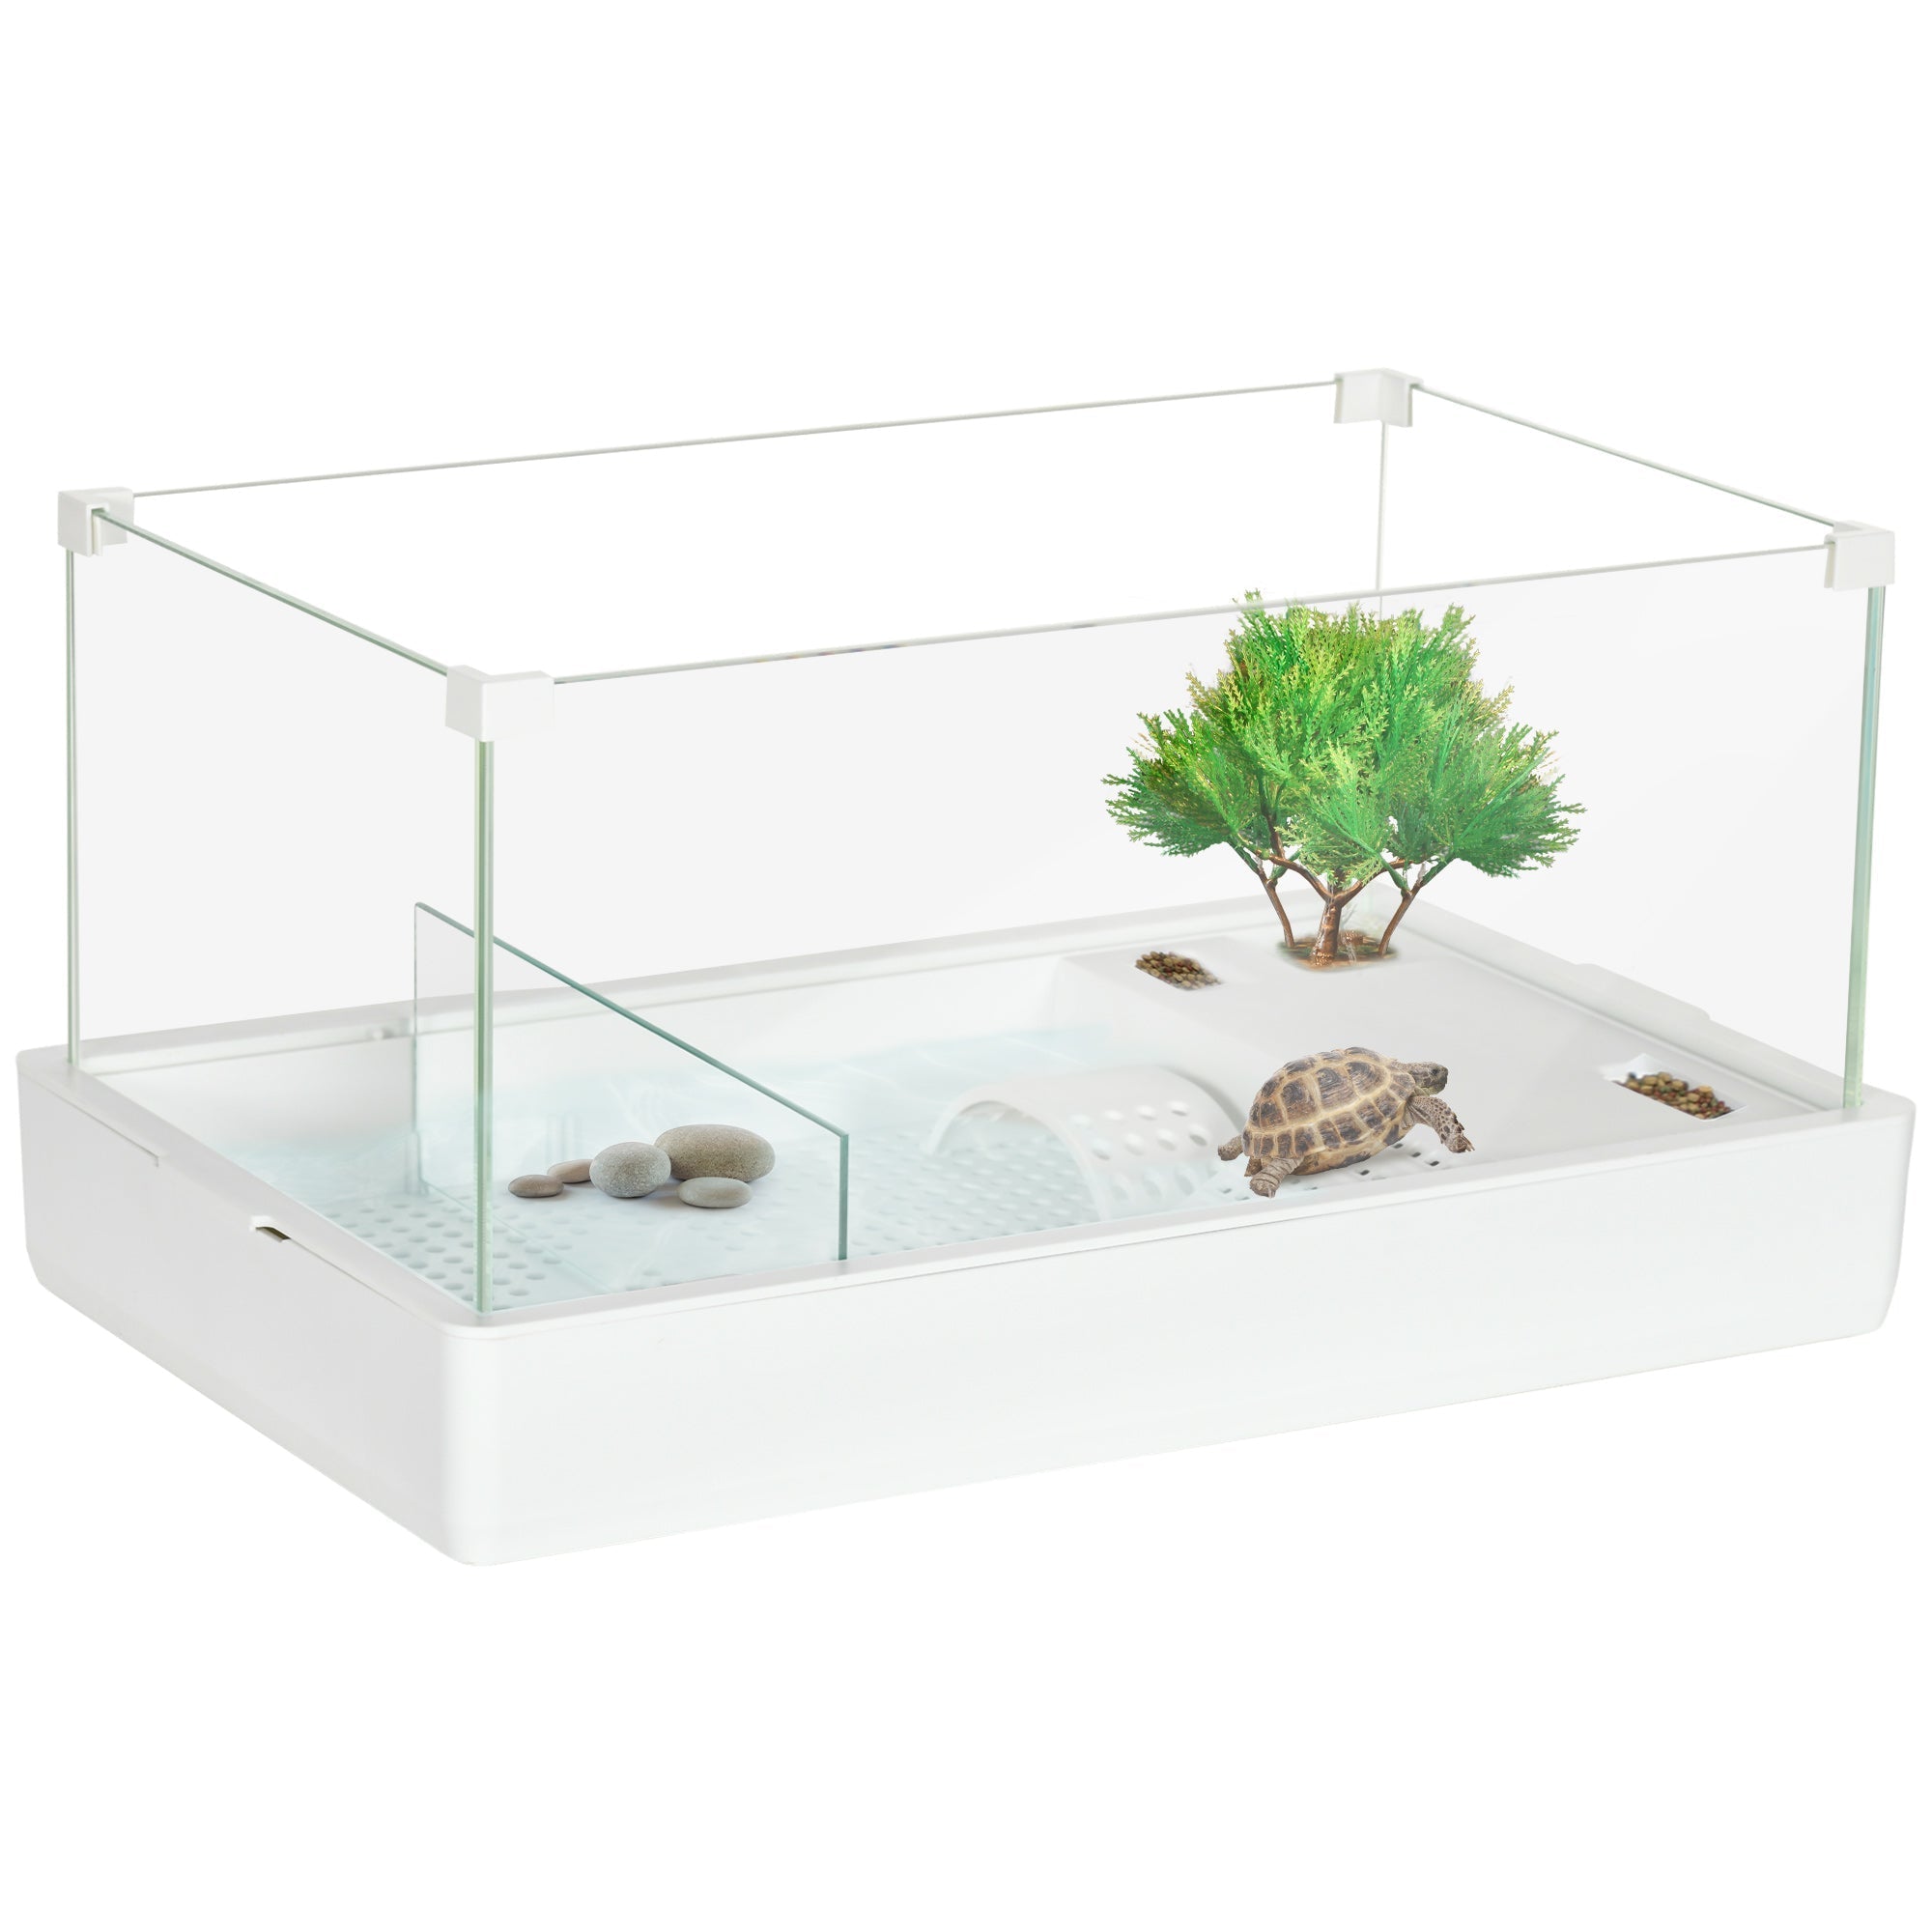 50 Turtle Tank Aquarium, Glass Tank with Basking Platform, Filter Layer Design, Full View Visually Terrapin Reptile Habitat,, PawHut,